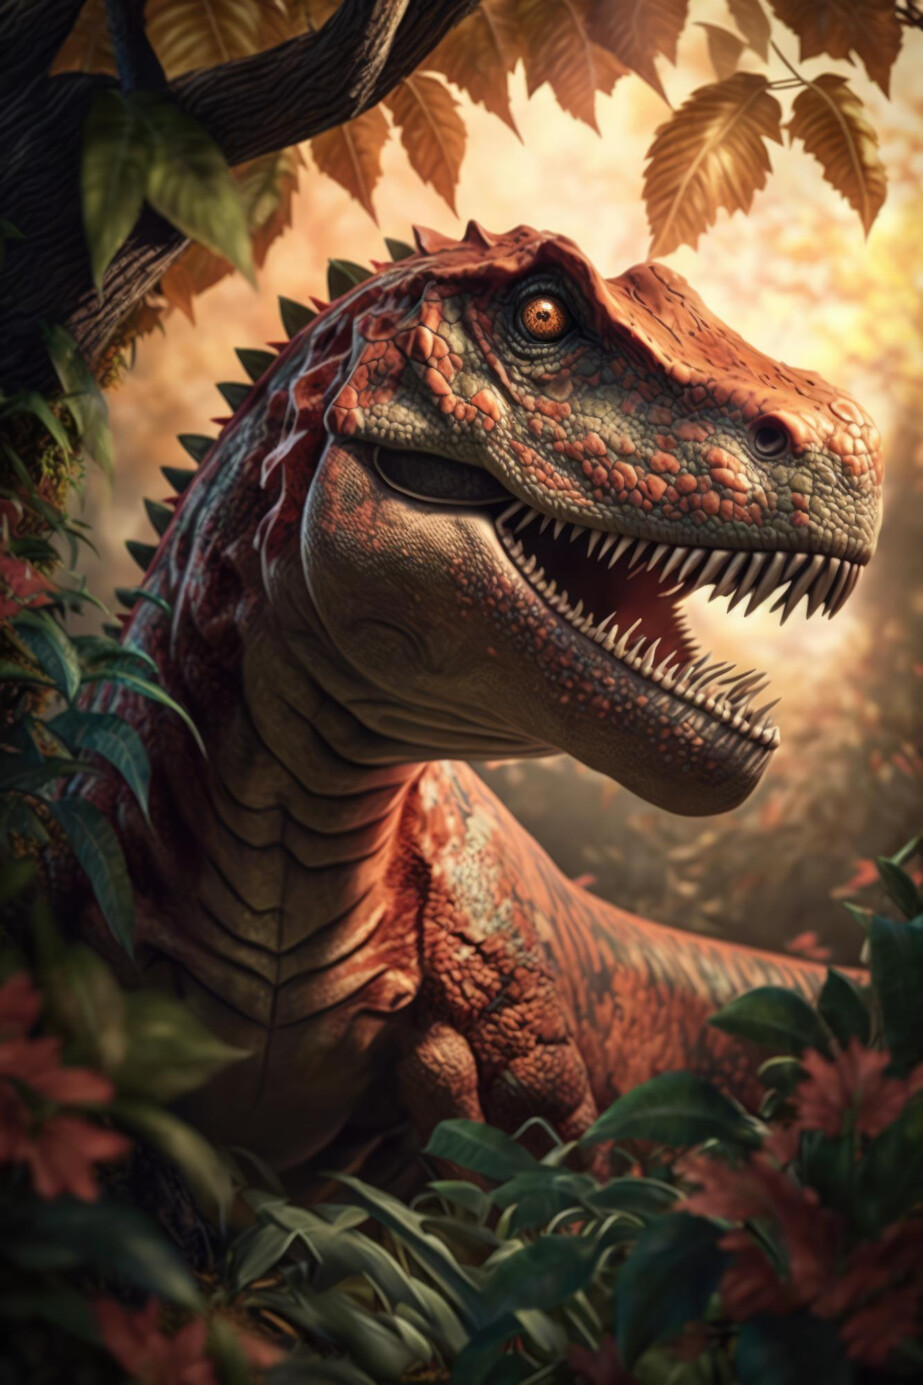 Tyrannosaurus Rex Head - Original image